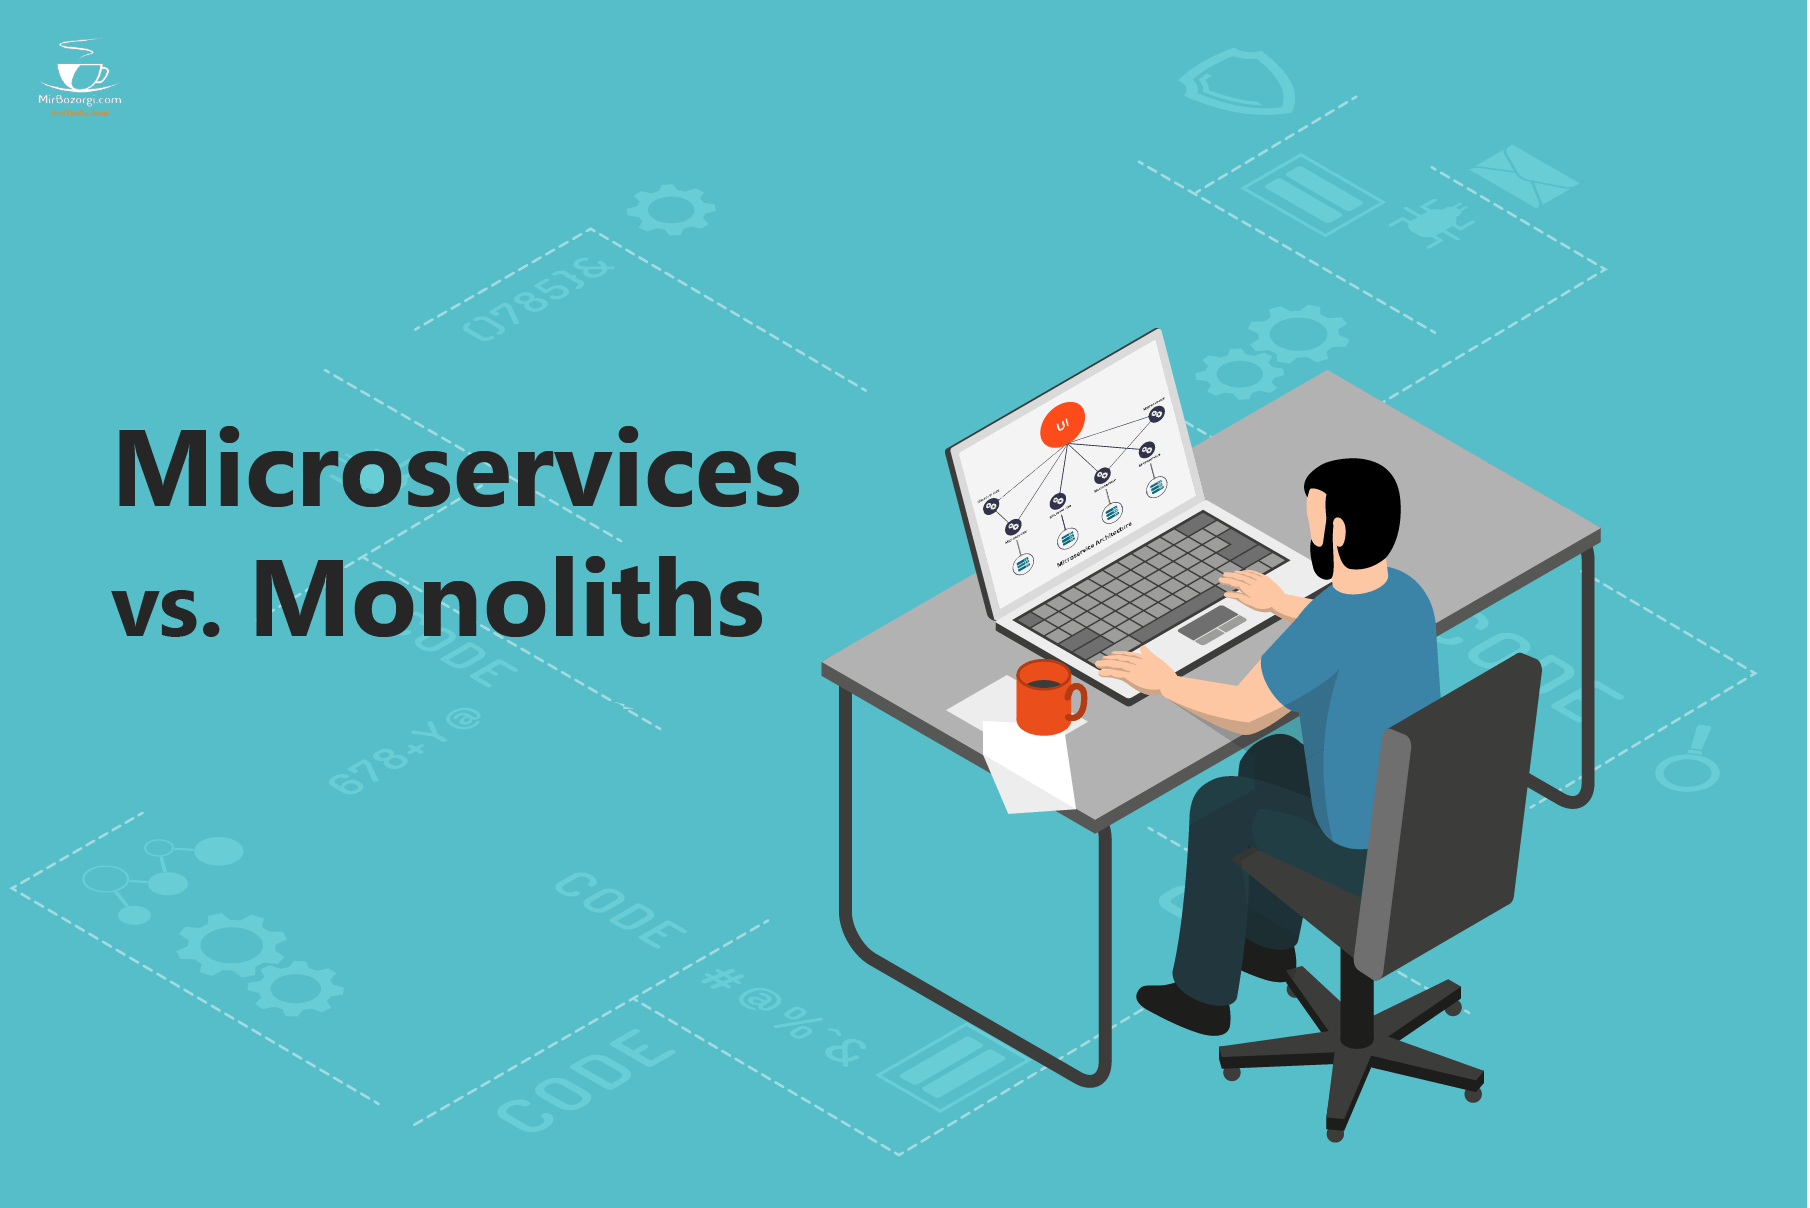 Microservices vs. Monoliths